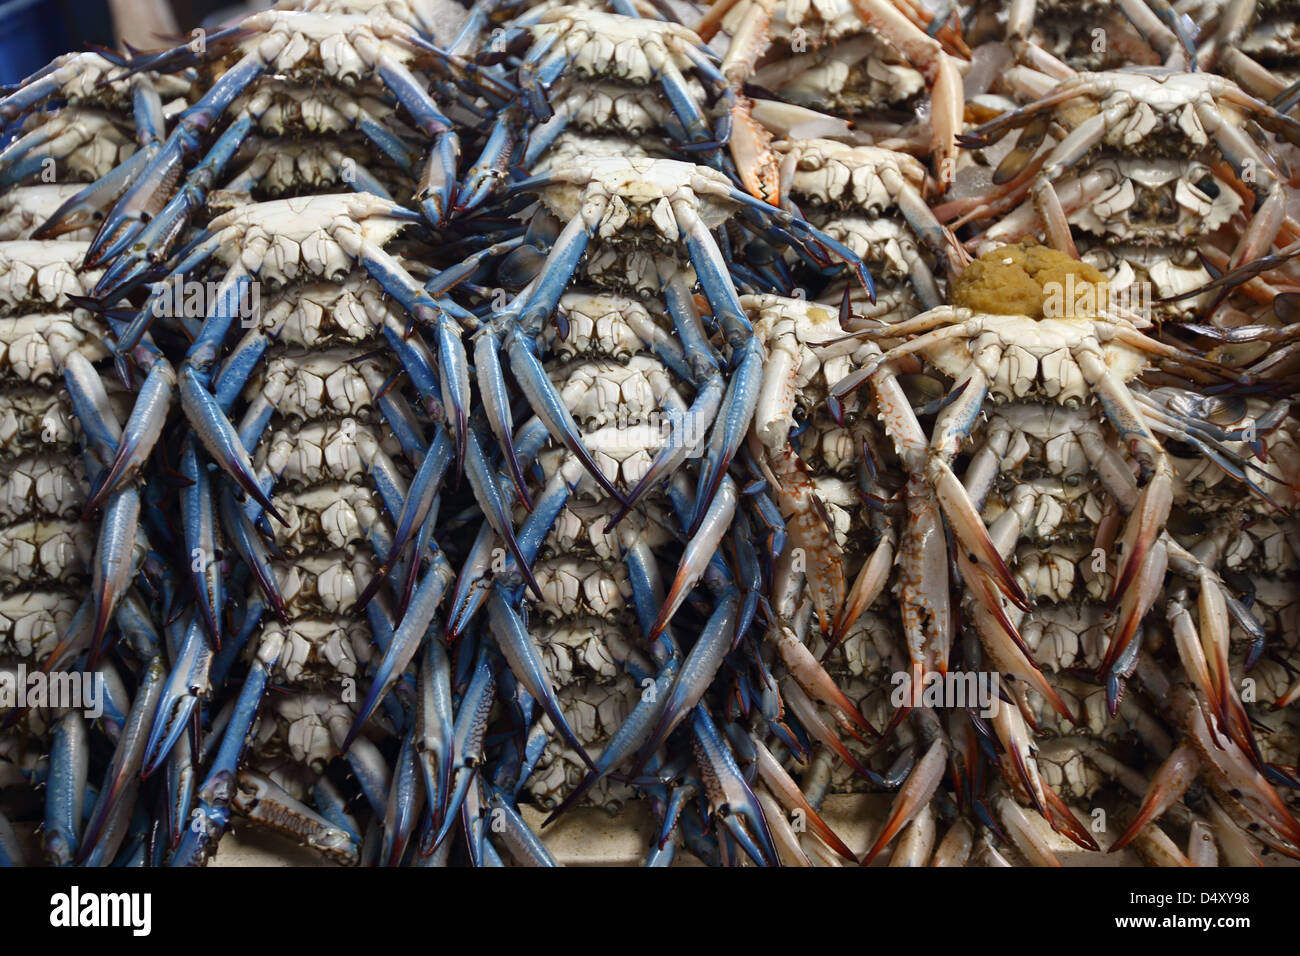 Closeup detail of crabs at fish market, Dubai, United Arab Emirates Stock Photo